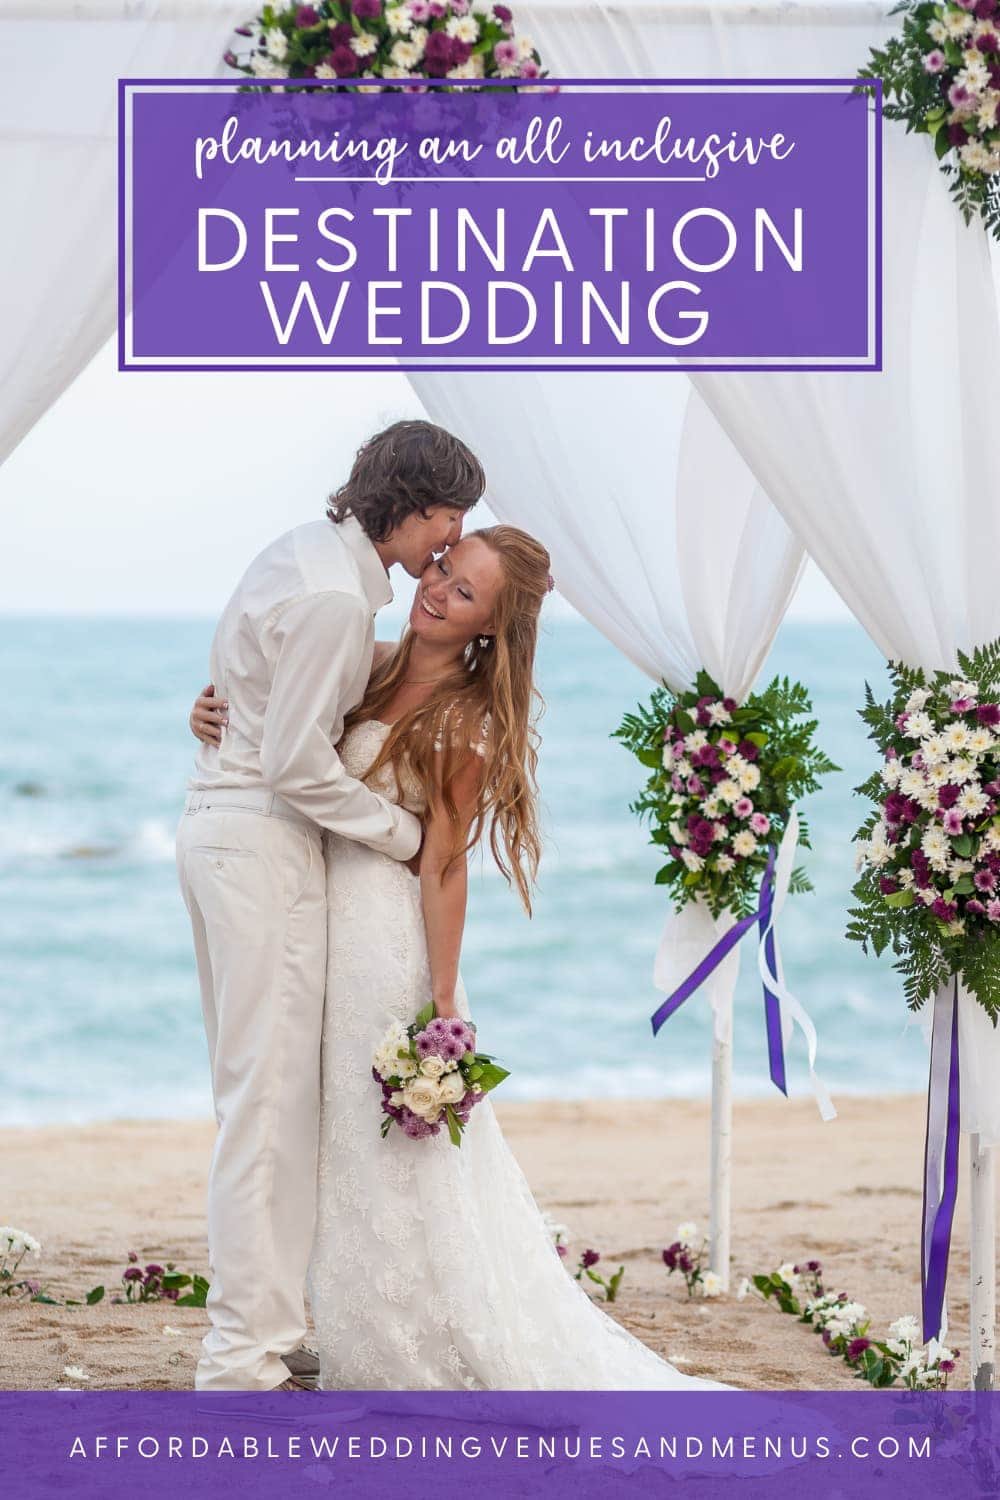 All Inclusive Destination Weddings: Plan a Resort Wedding